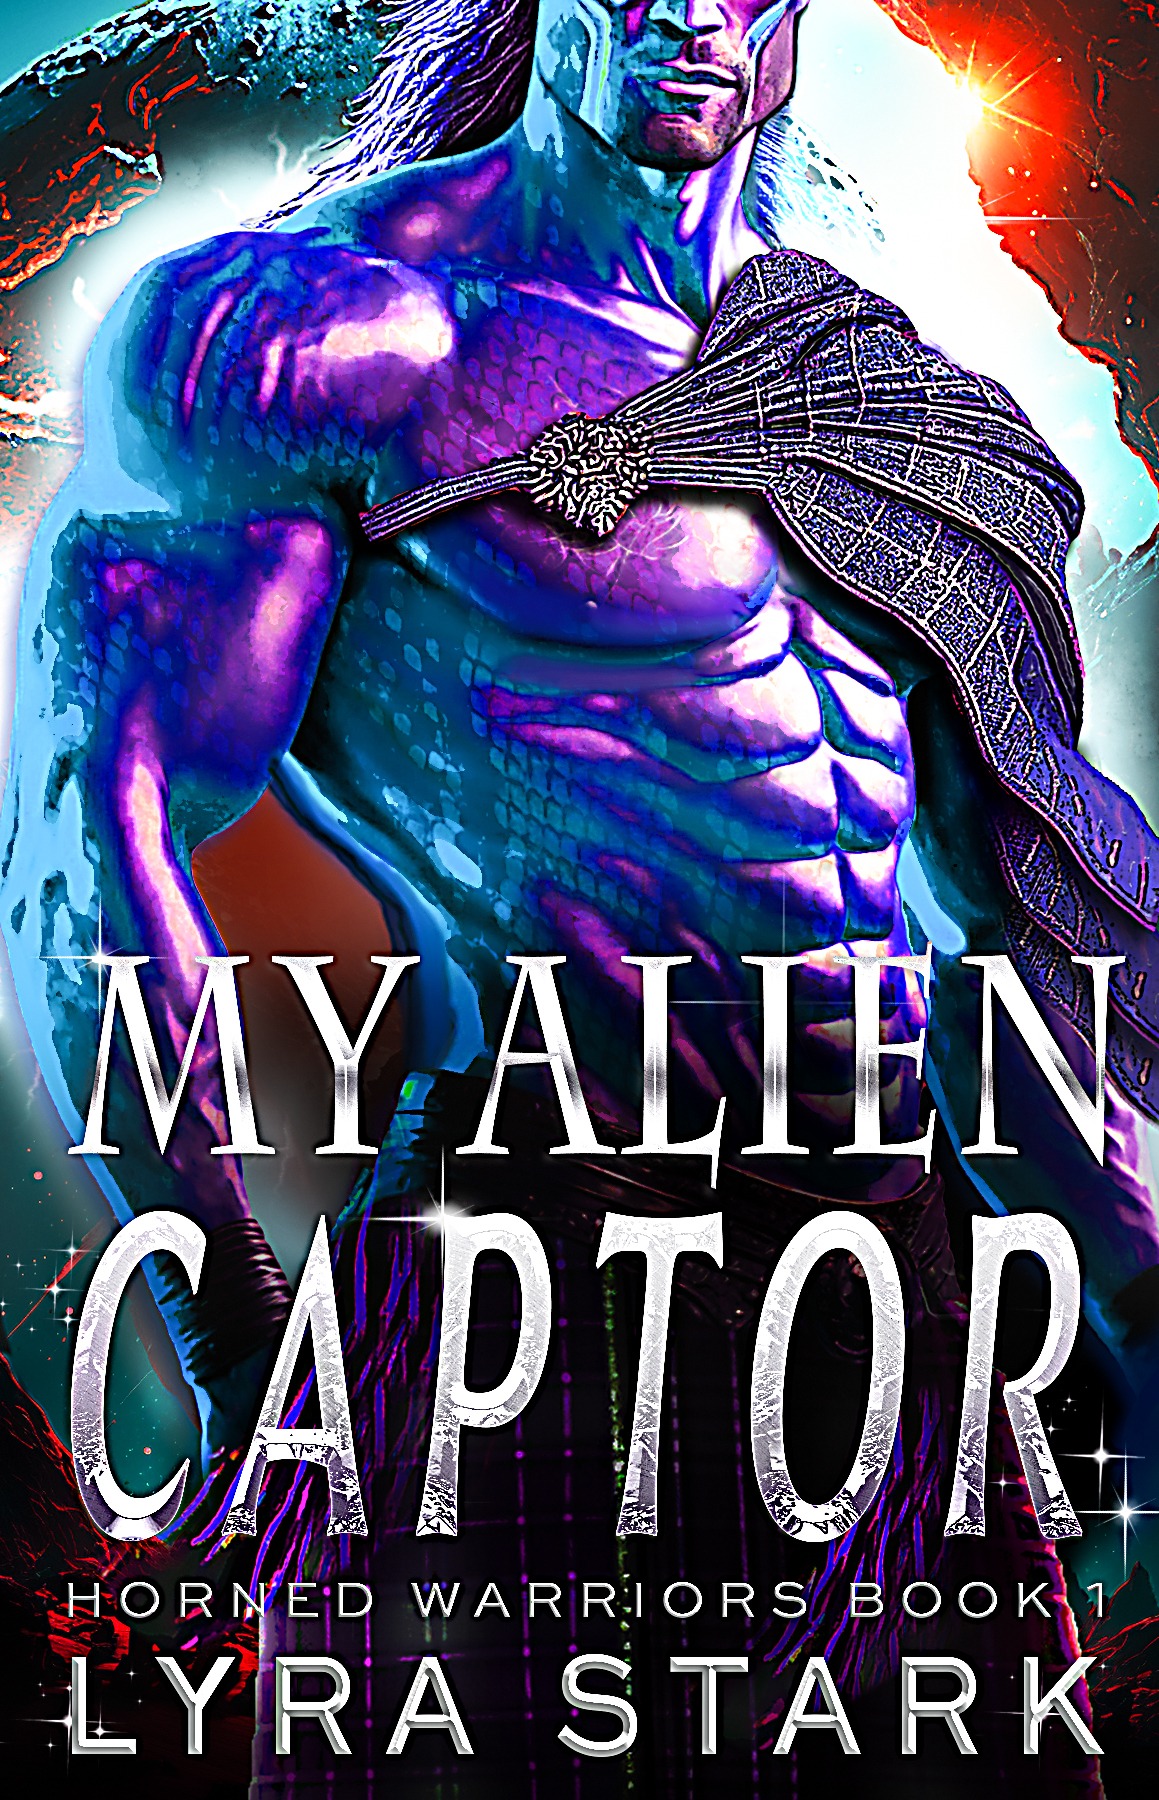 My Alien Captor by Lyra Star PDF Download